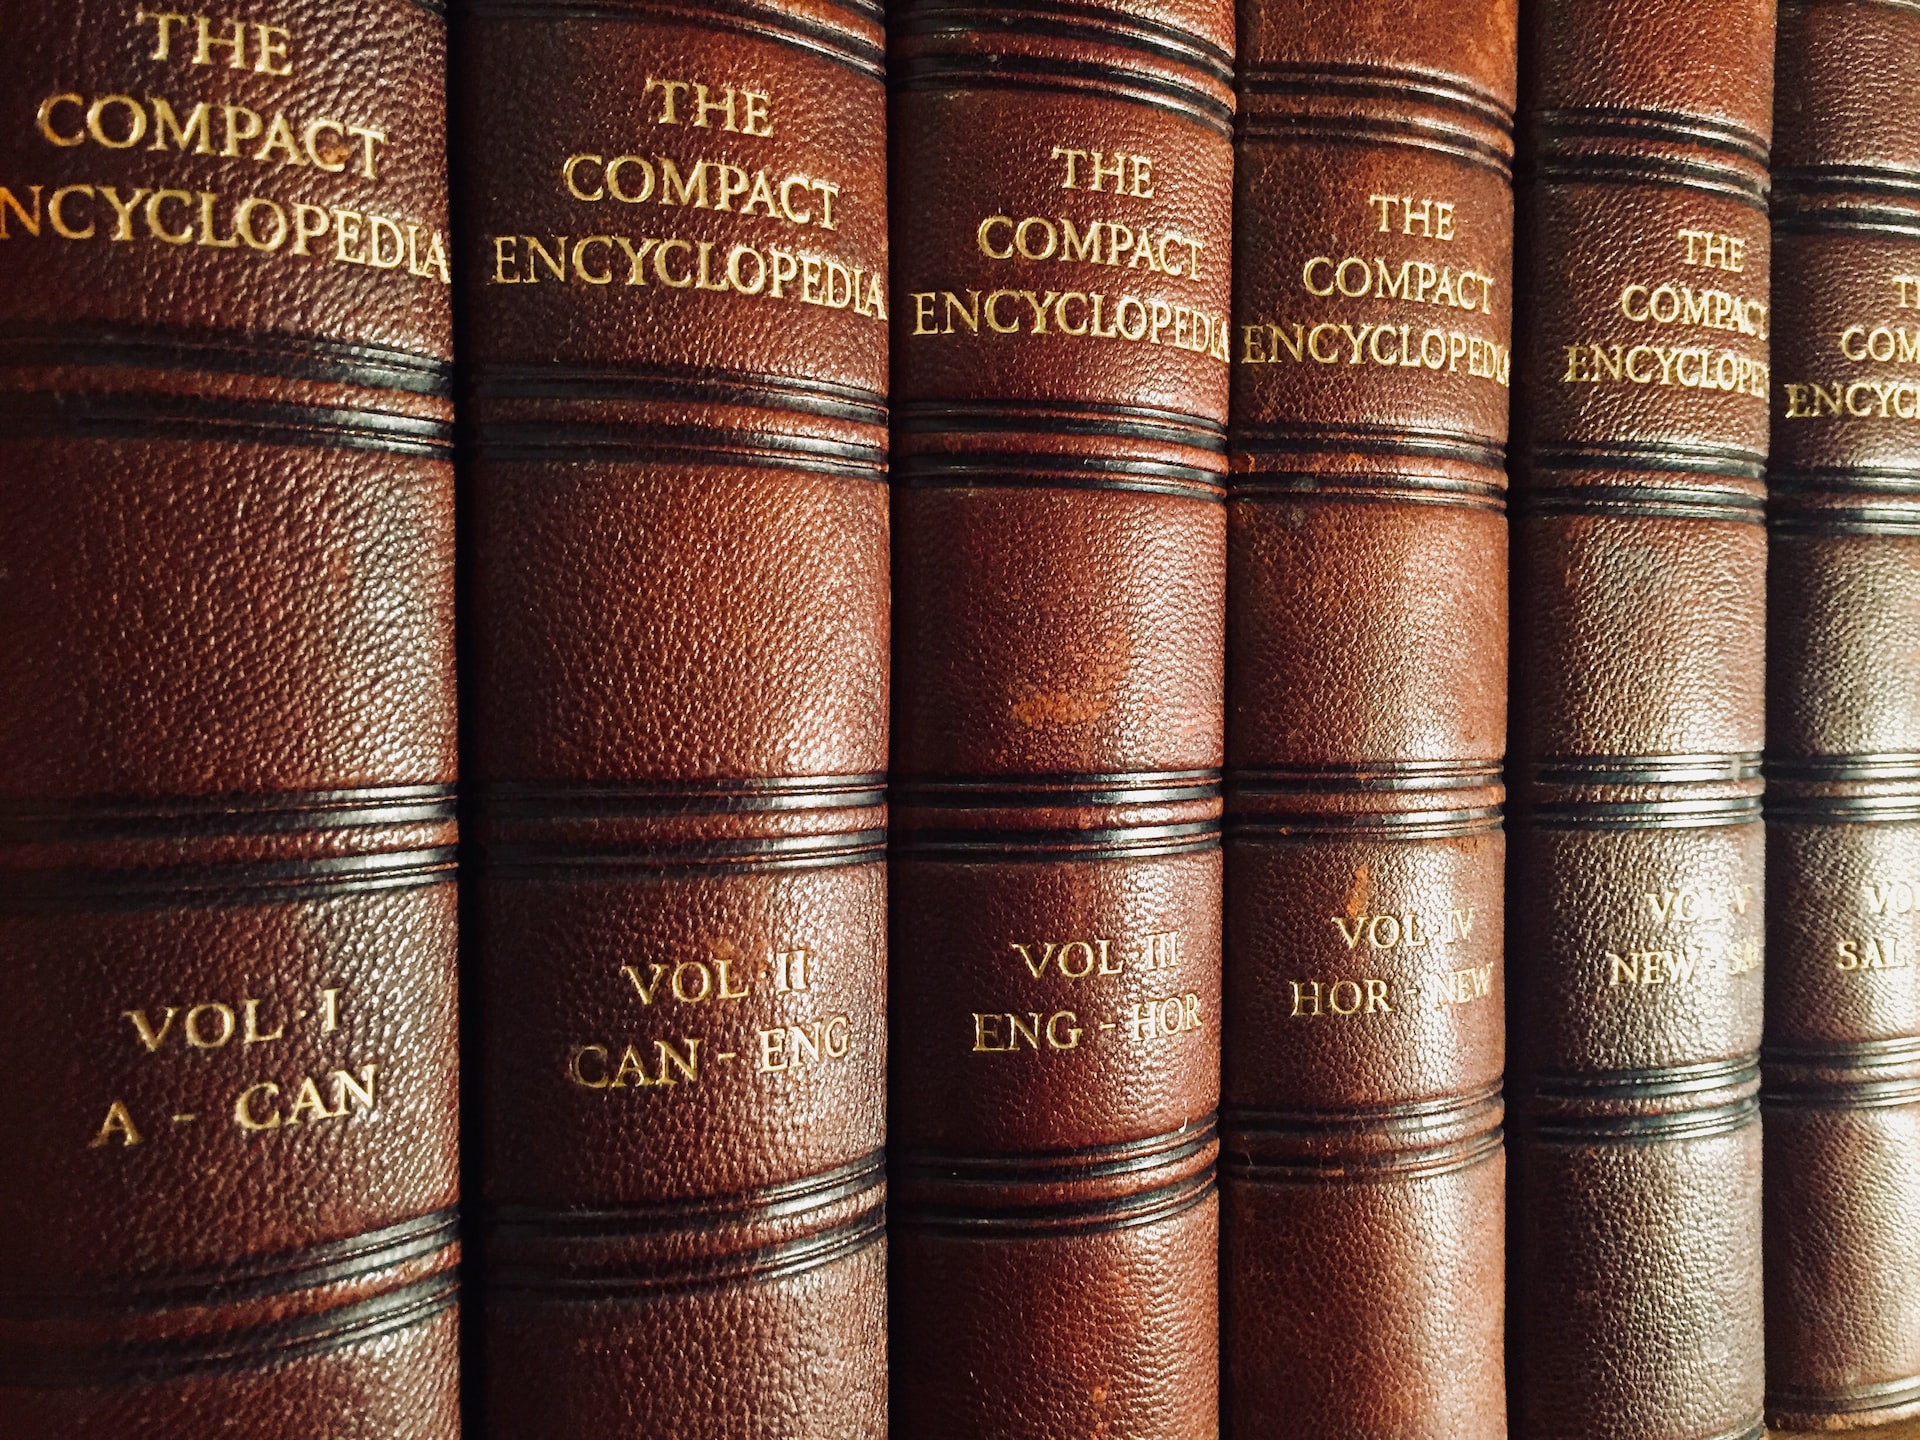 old encyclopedias in a bookshelf